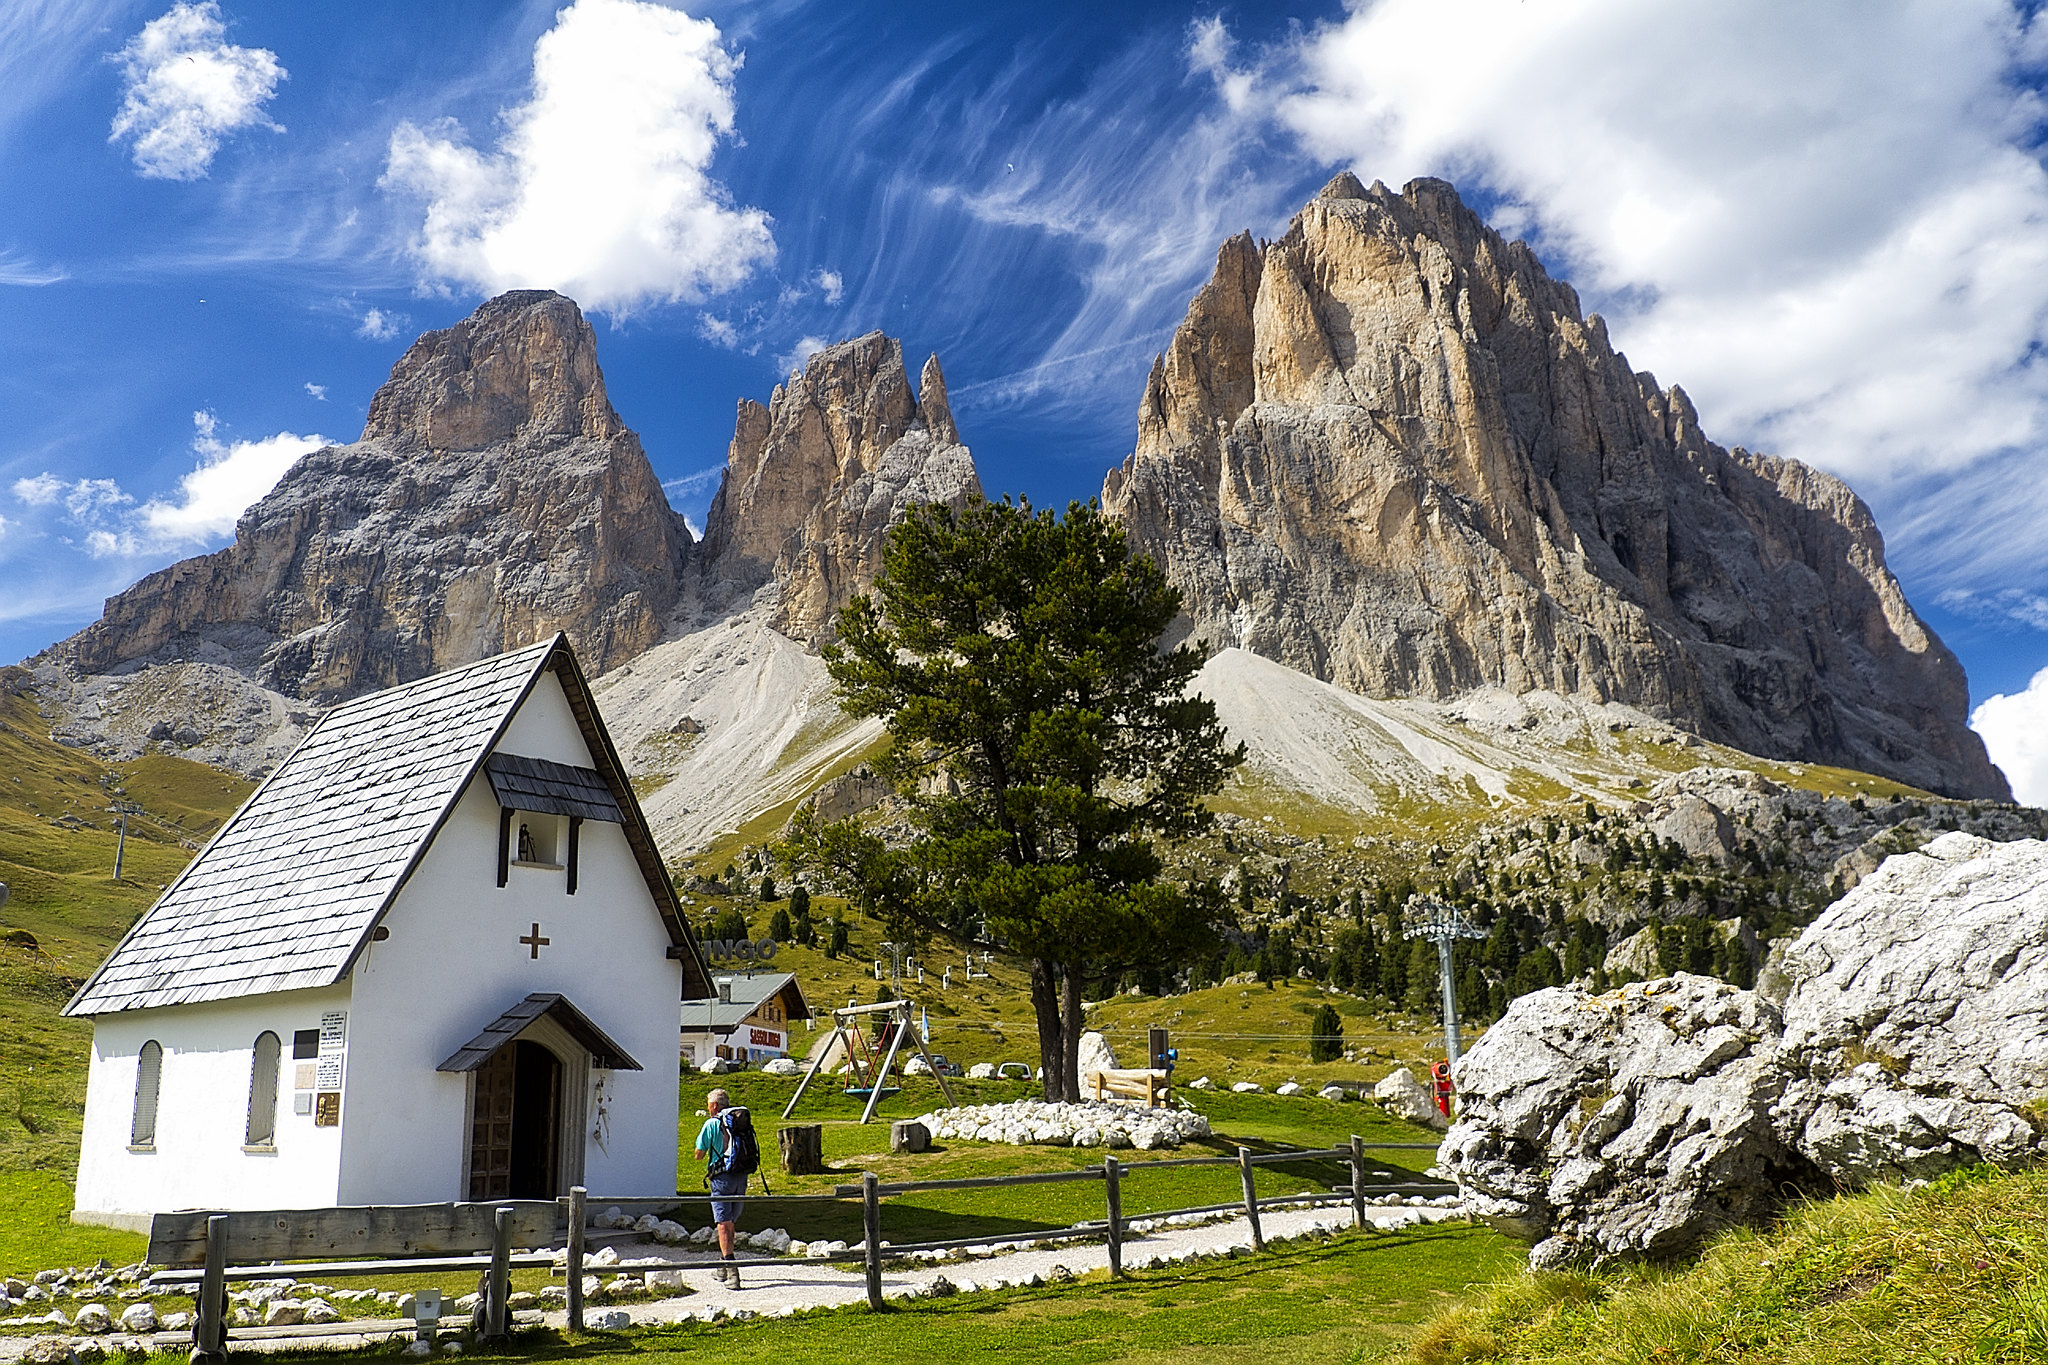 Trentino Alto Adige Image by Enrico Pighetti via Flickr shared under Creative Commons License